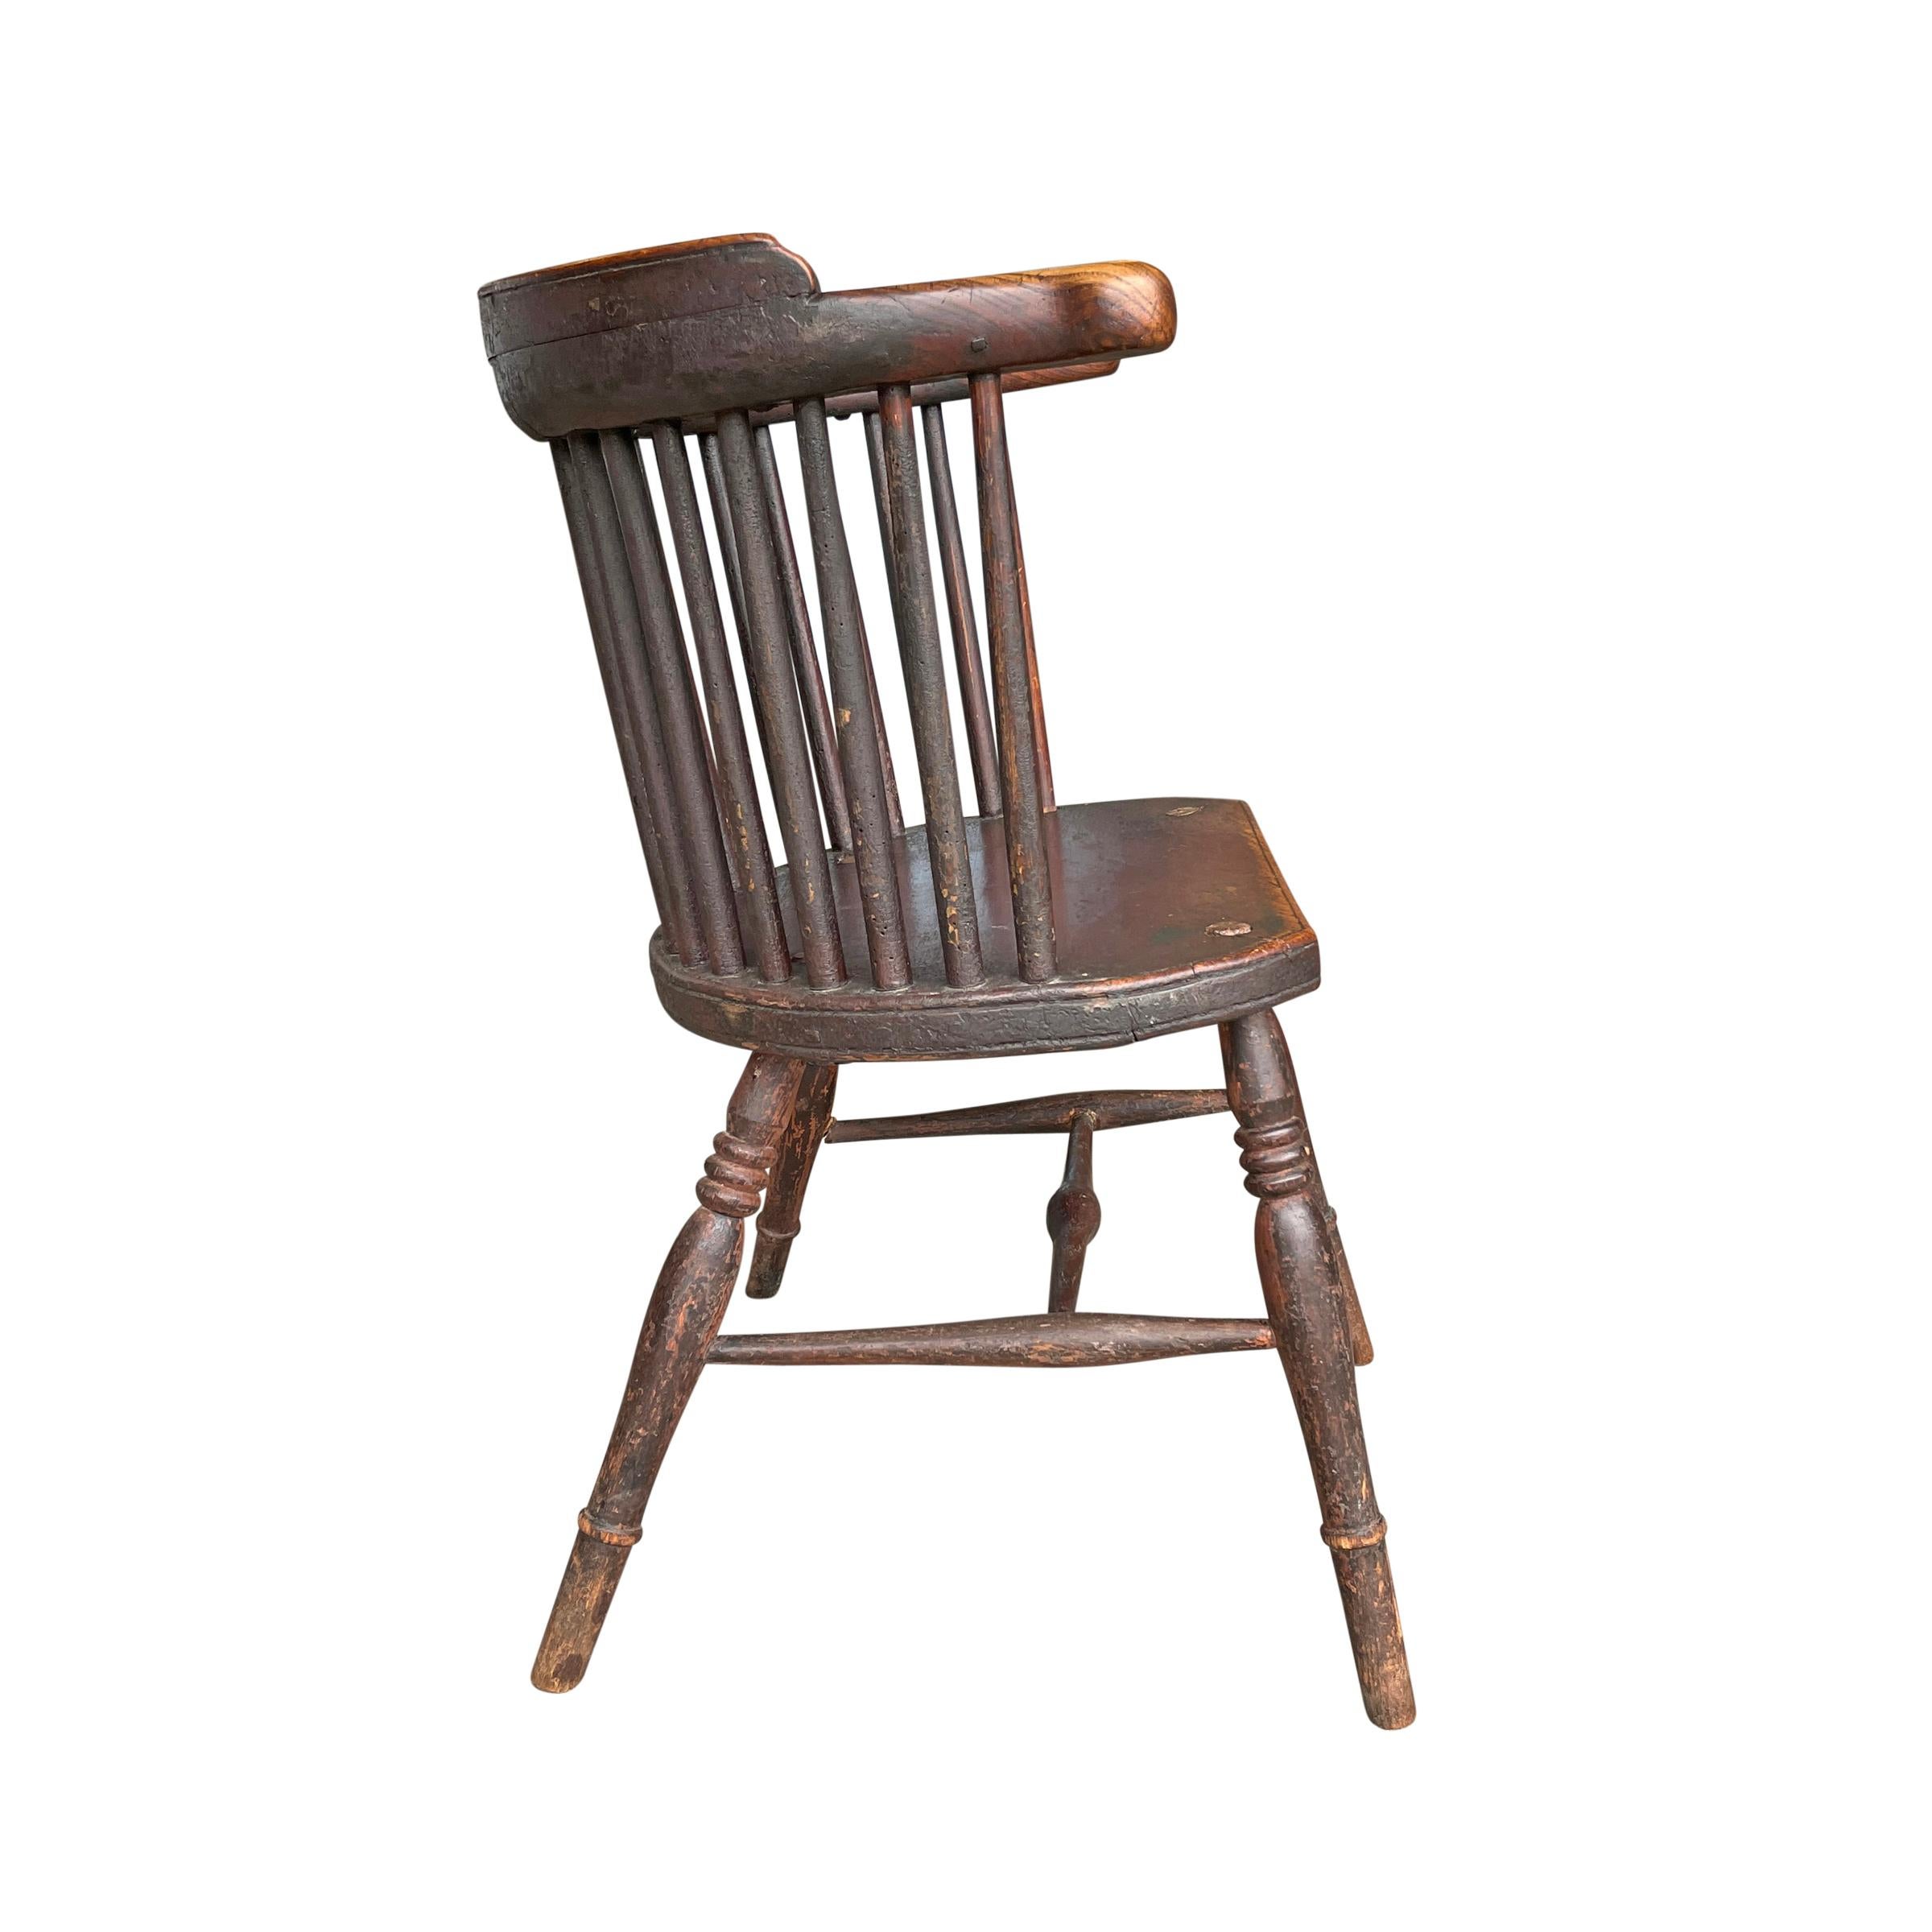 Primitive 19th Century English Barrelback Windsor Chair For Sale